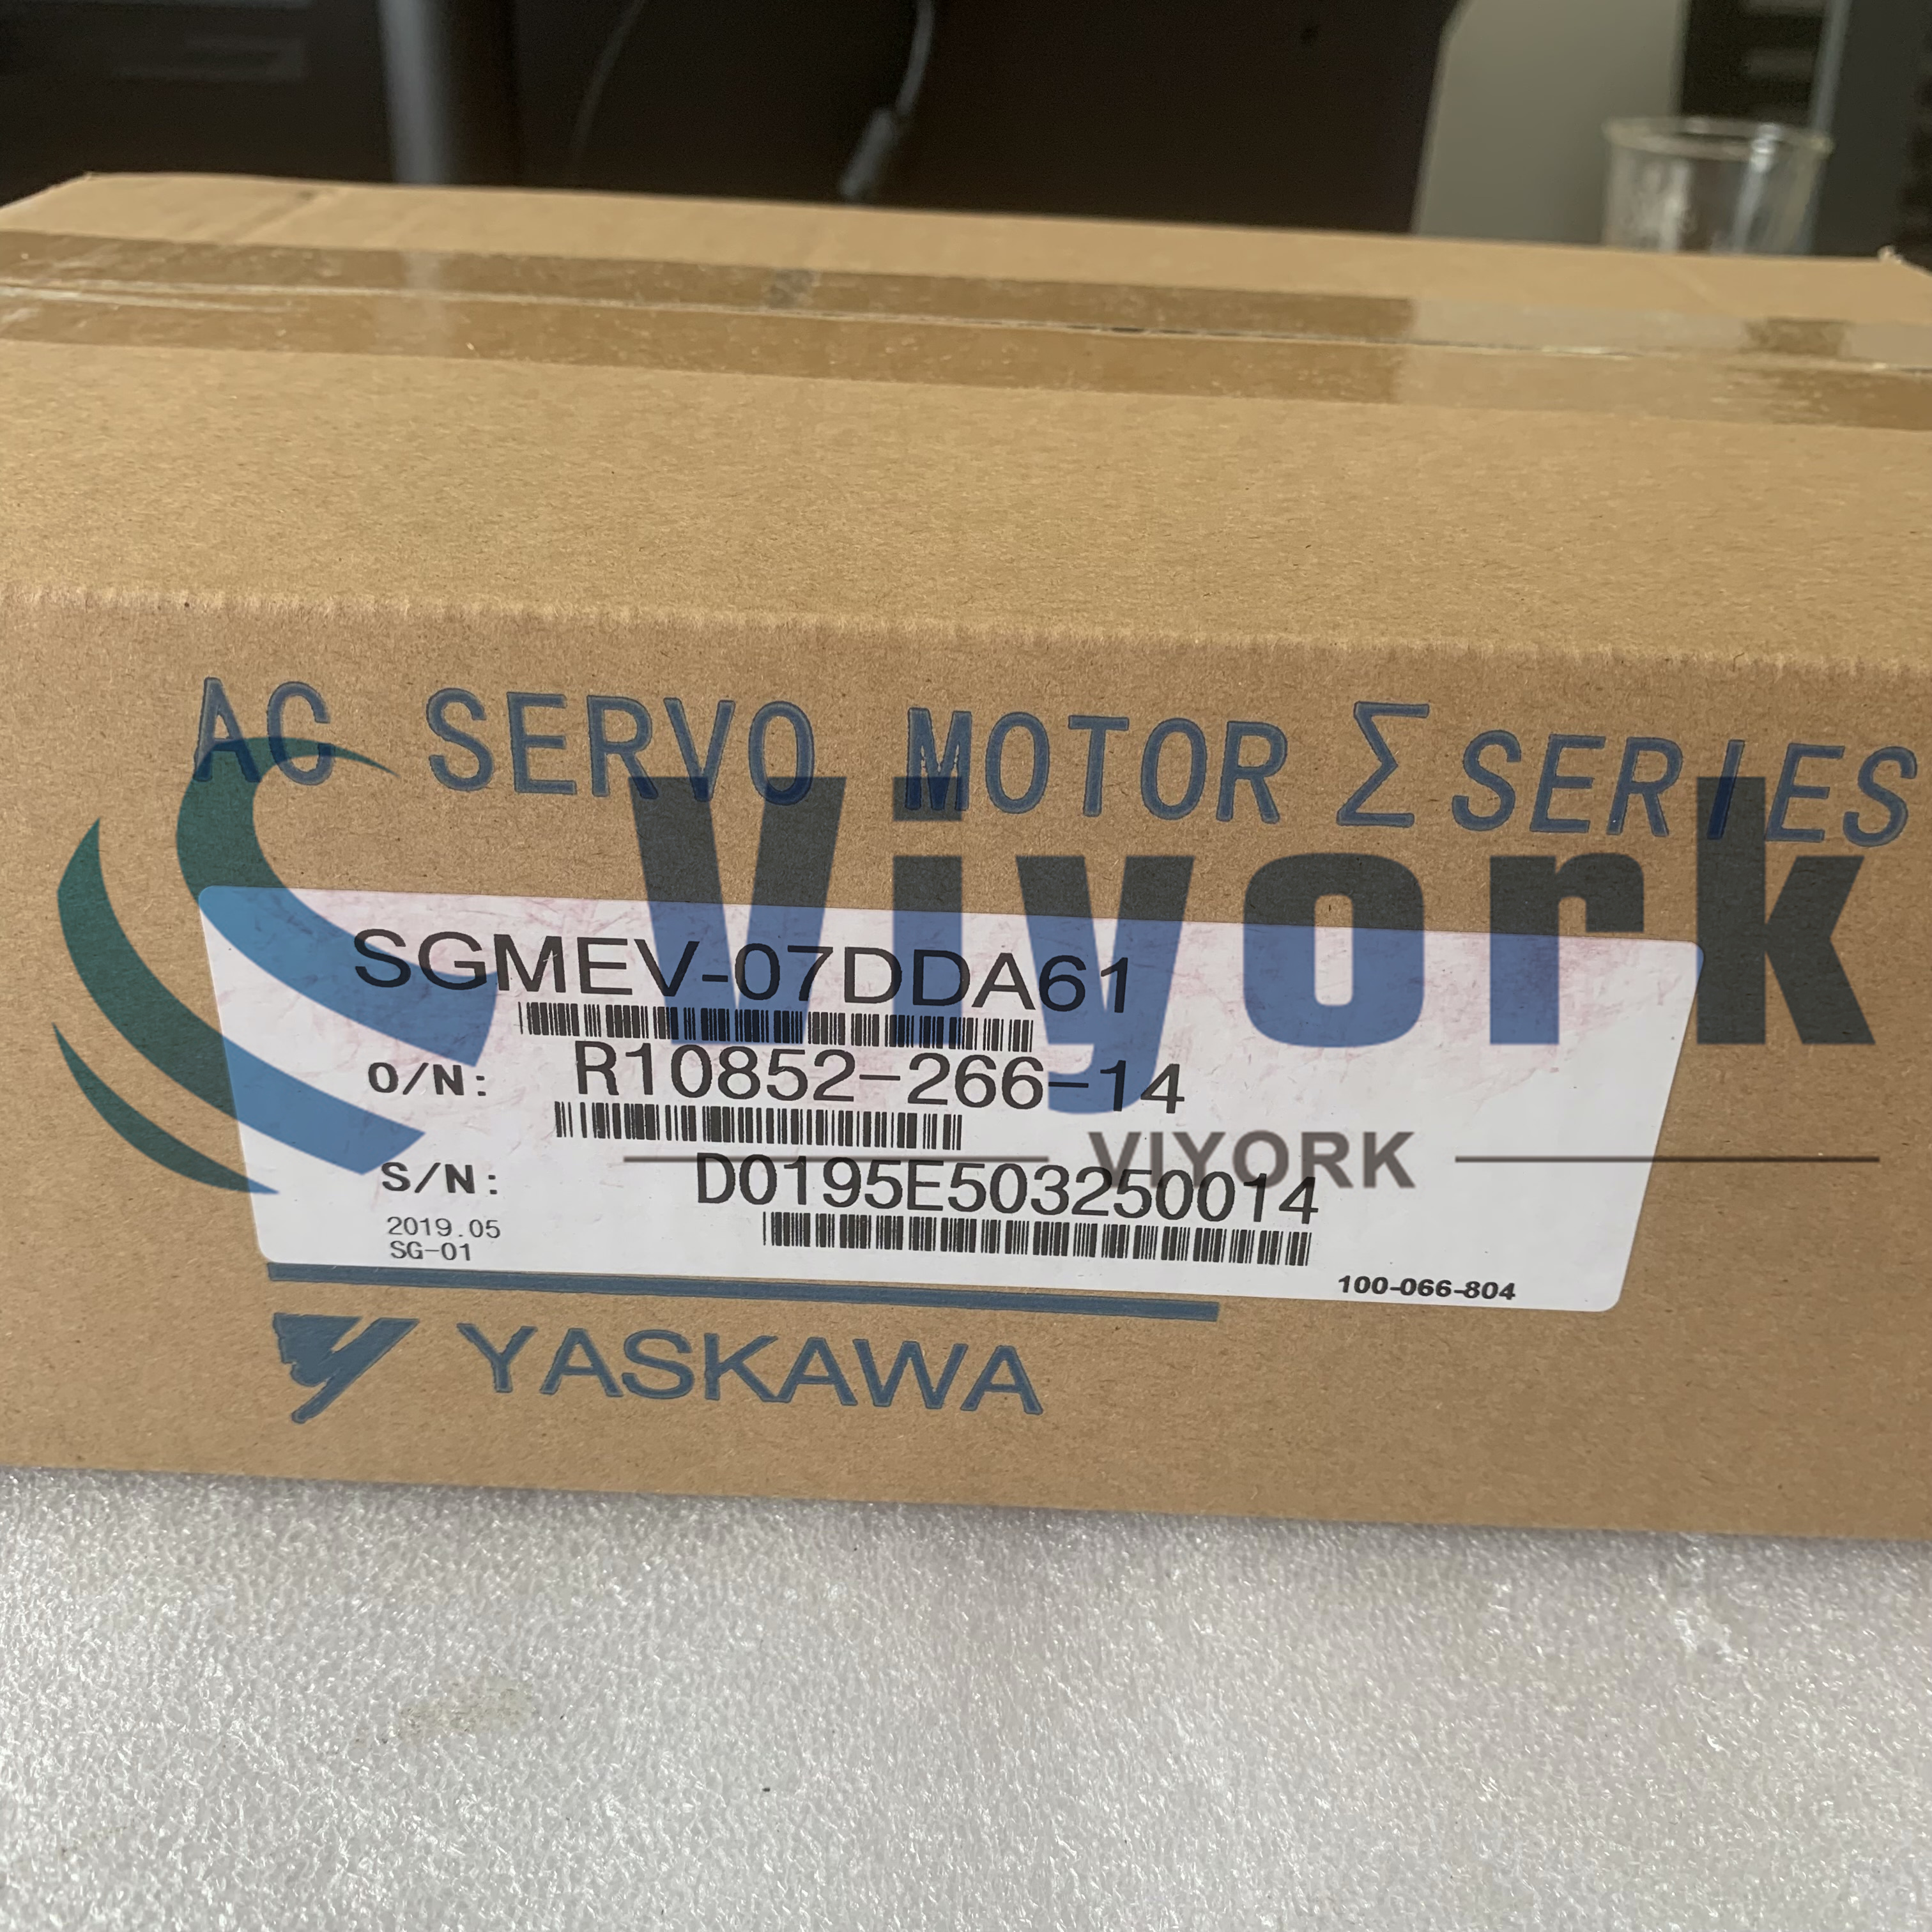 Yaskawa SGMEV-07DDA61 AC SERVO MOTOR 2.2AMP 3 PHASE 400VOLTS 650WATTS NEW